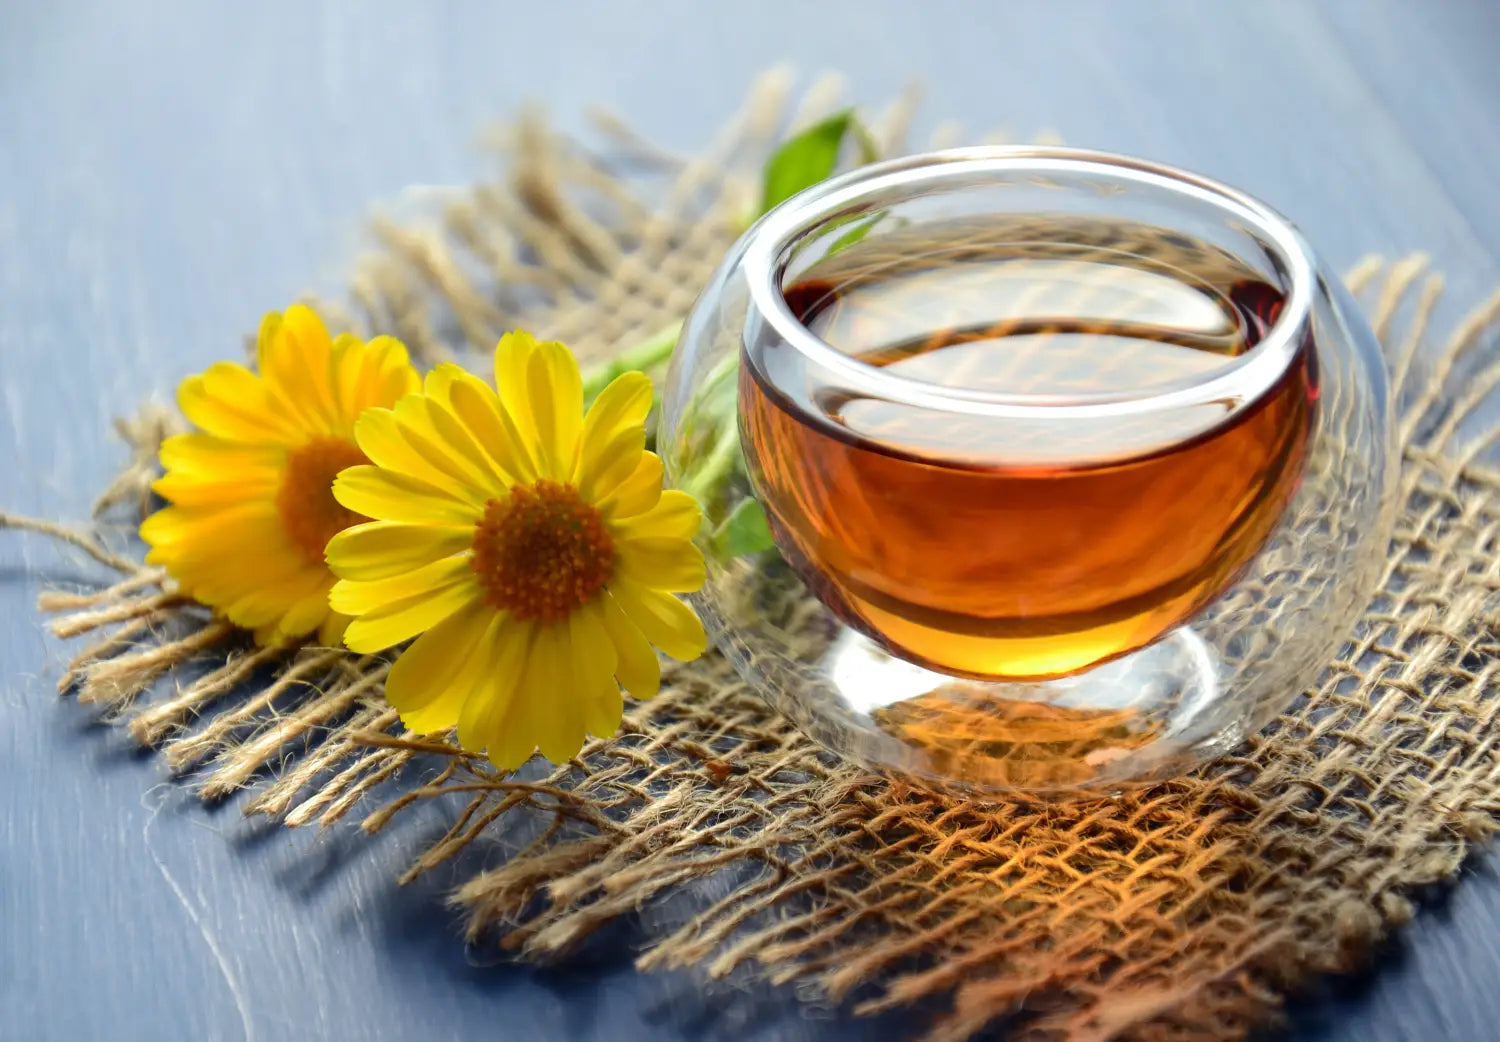 20 Fun Tea Quotes to Brighten Your Brew